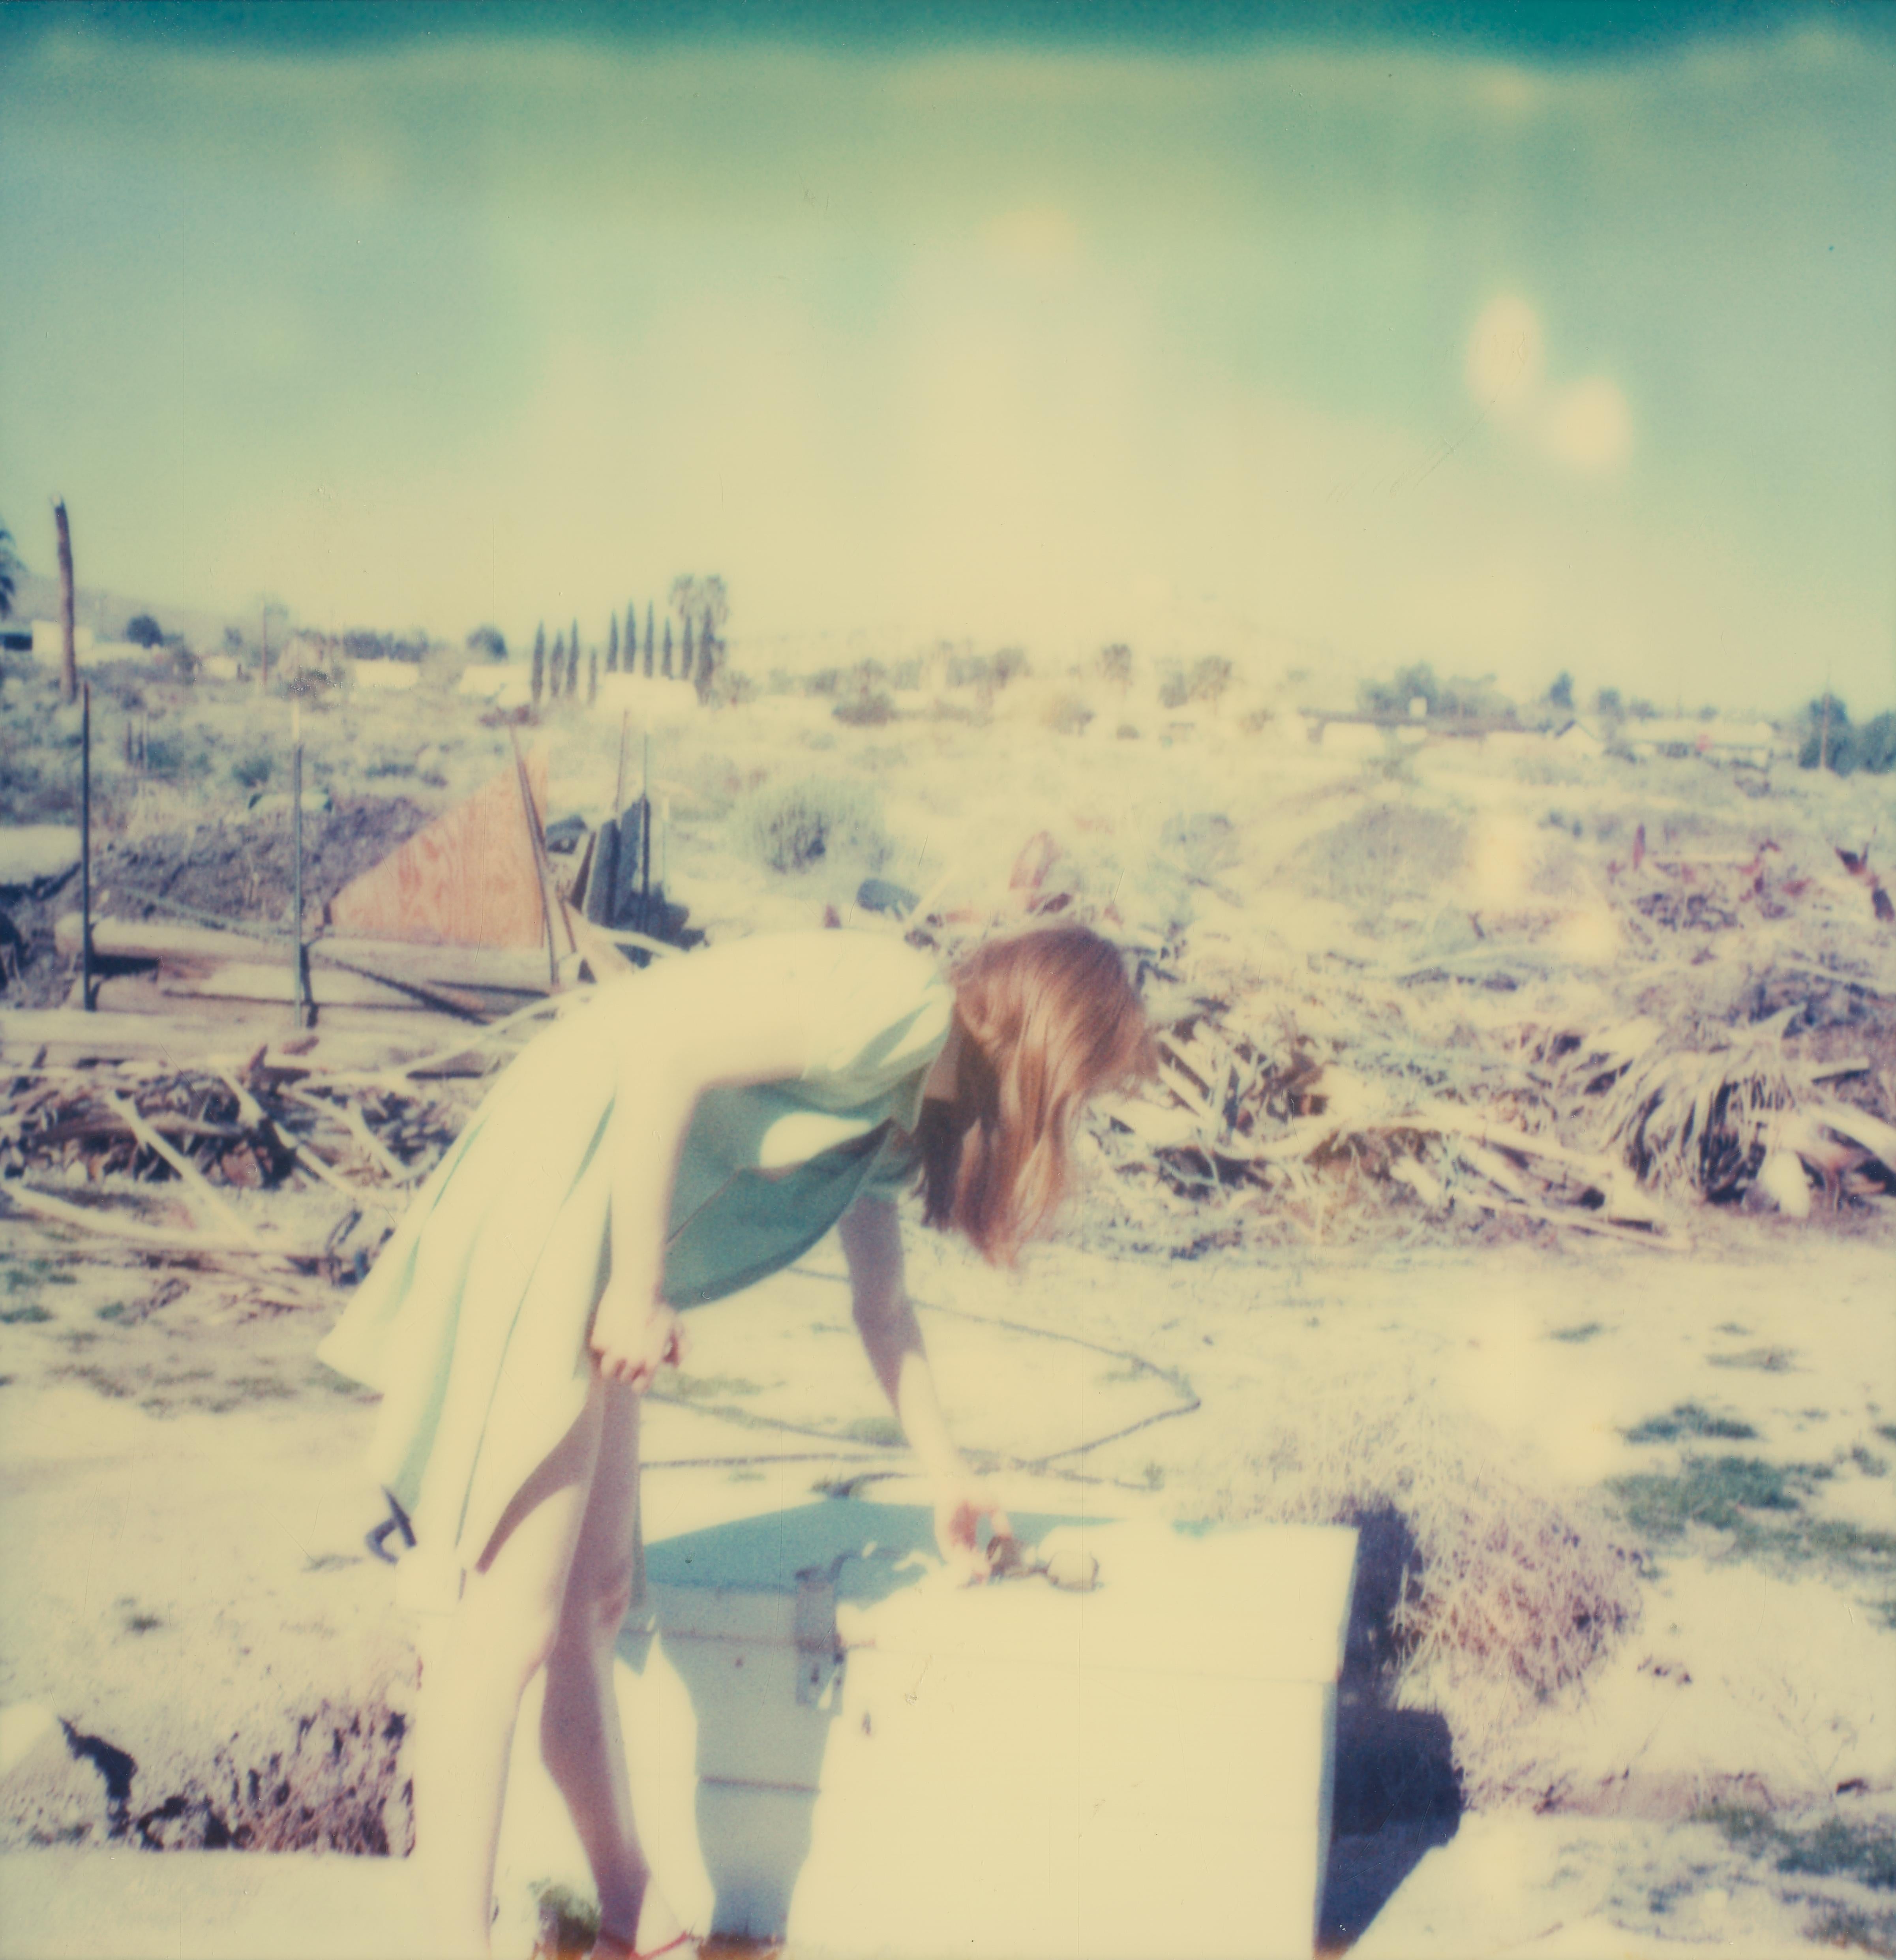 After the Flood (Till Death do us Part) - Contemporary, Polaroid, Women - Photograph by Stefanie Schneider